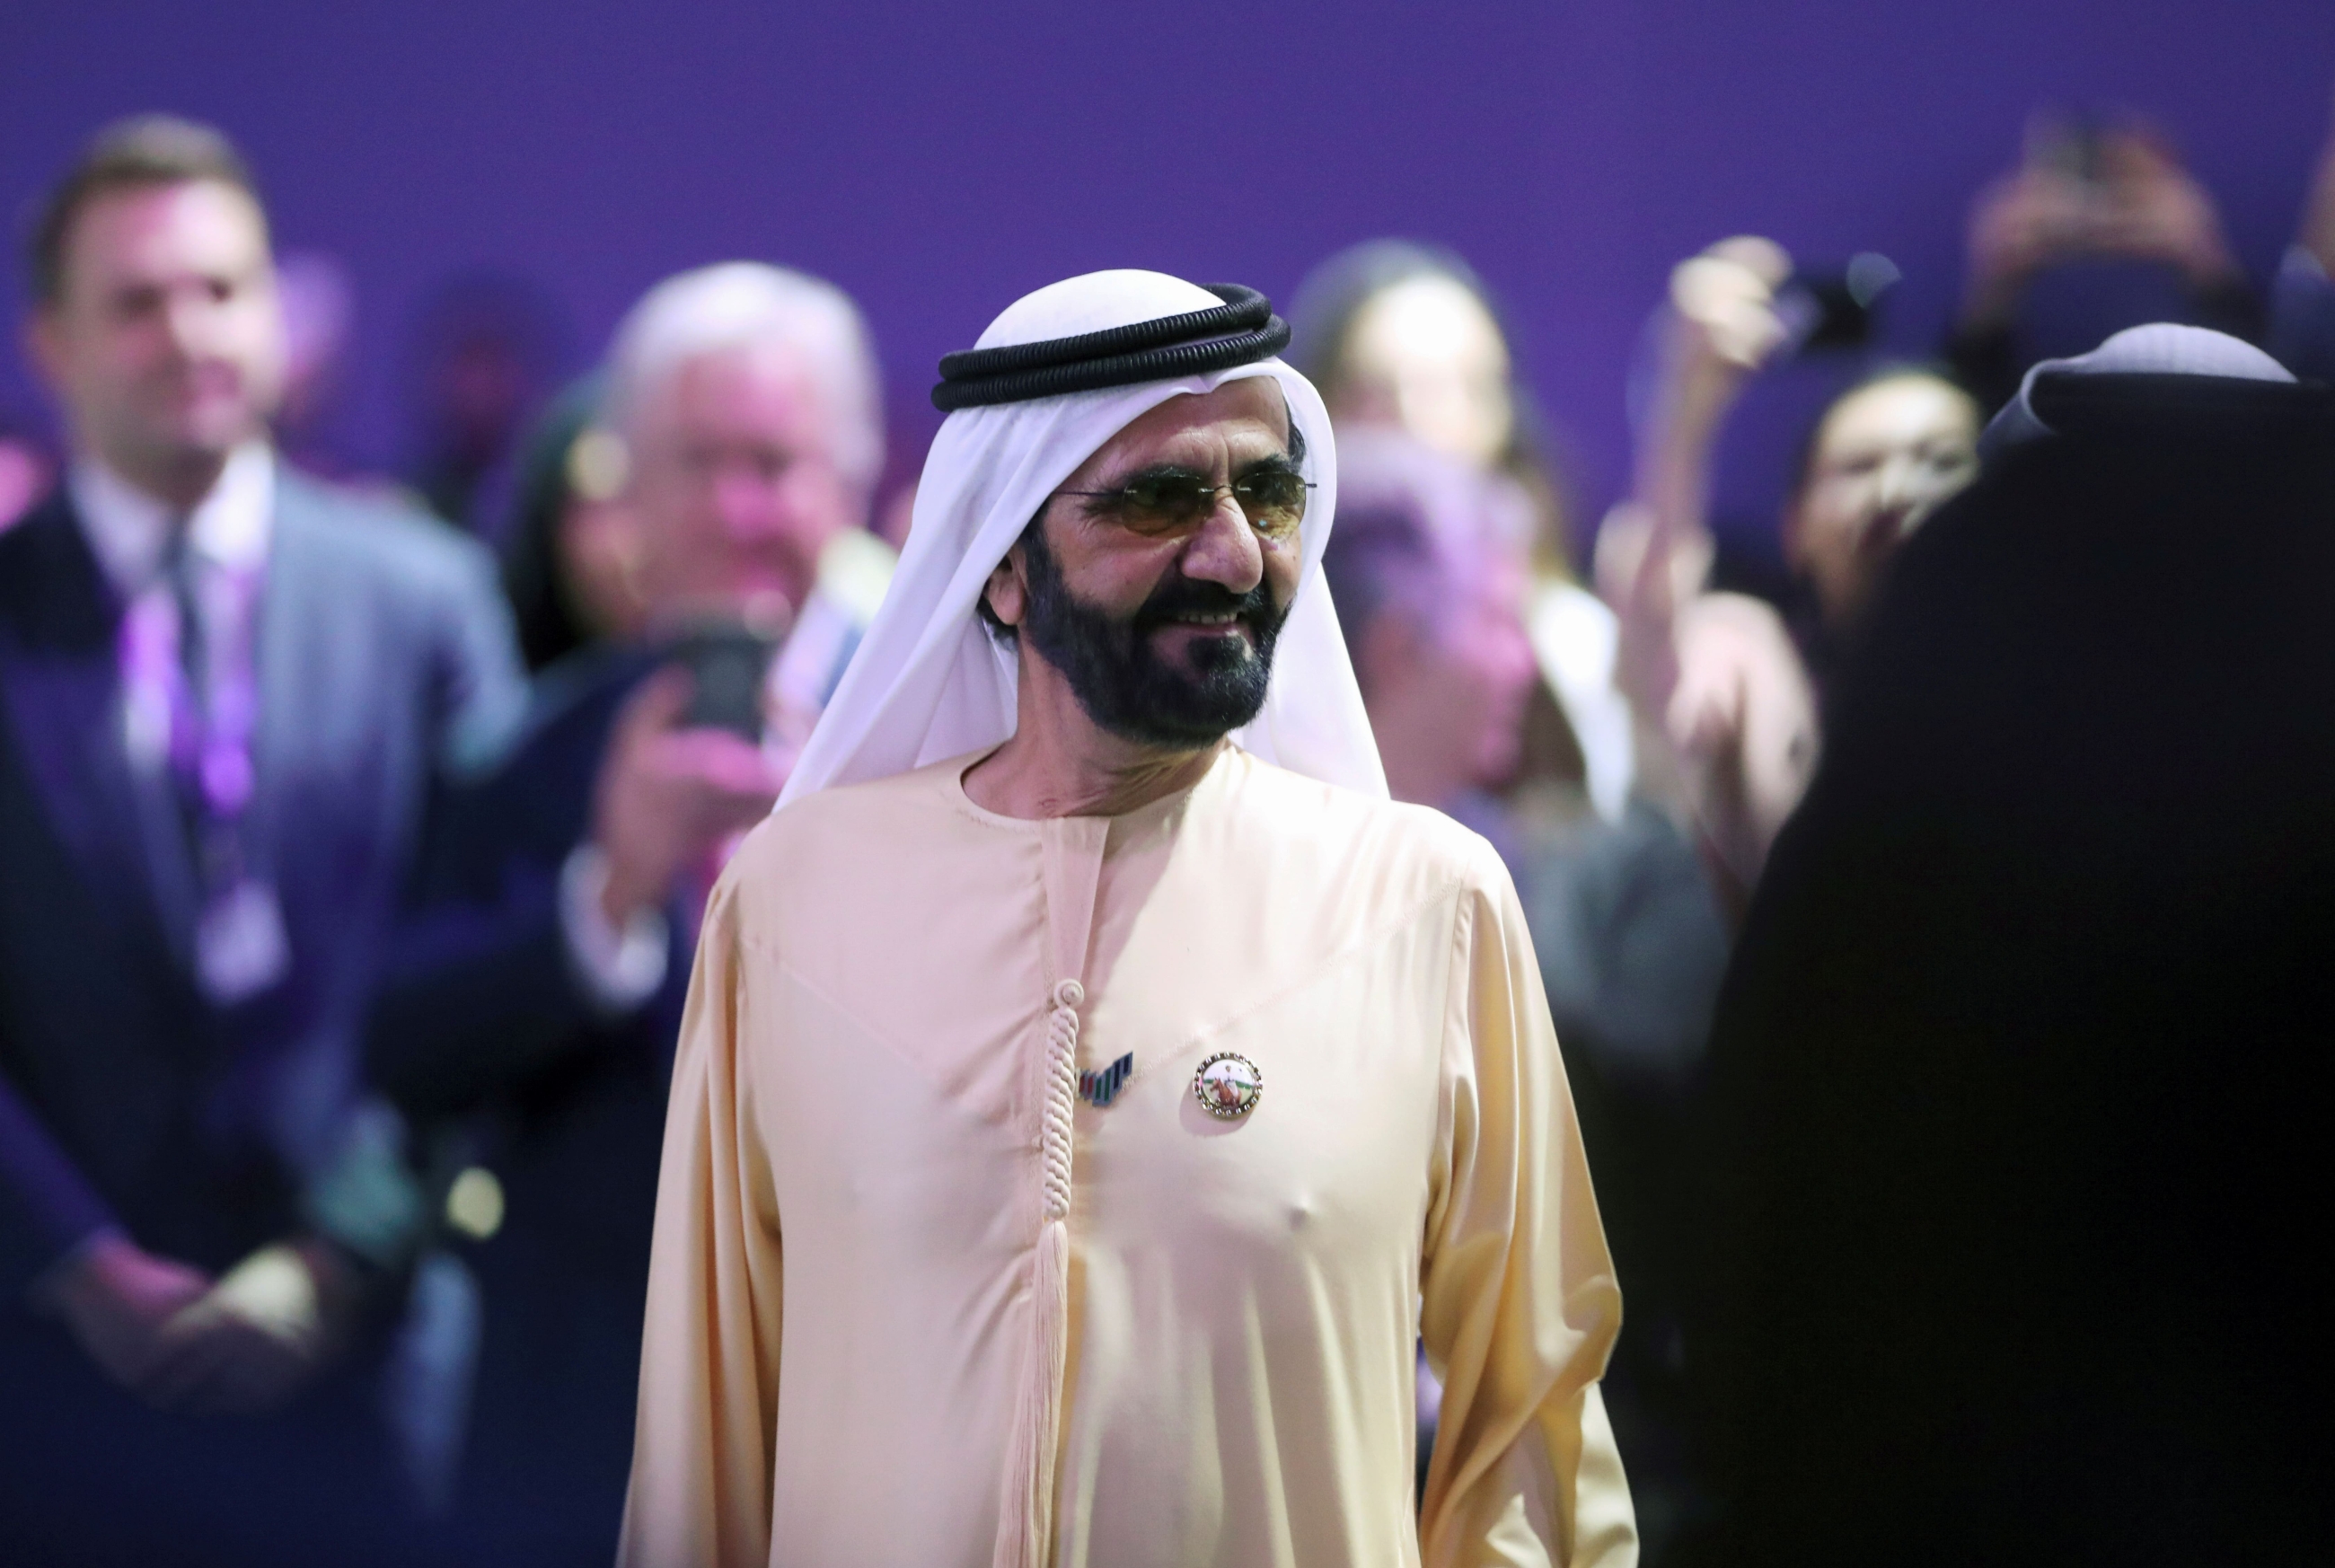 Ruler of Dubai Sheikh Mohammed bin Rashid al-Maktoum attends the Global Women's Forum in Dubai, United Arab Emirates, 16 February 2020. (REUTERS/Christopher Pike/File Photo)